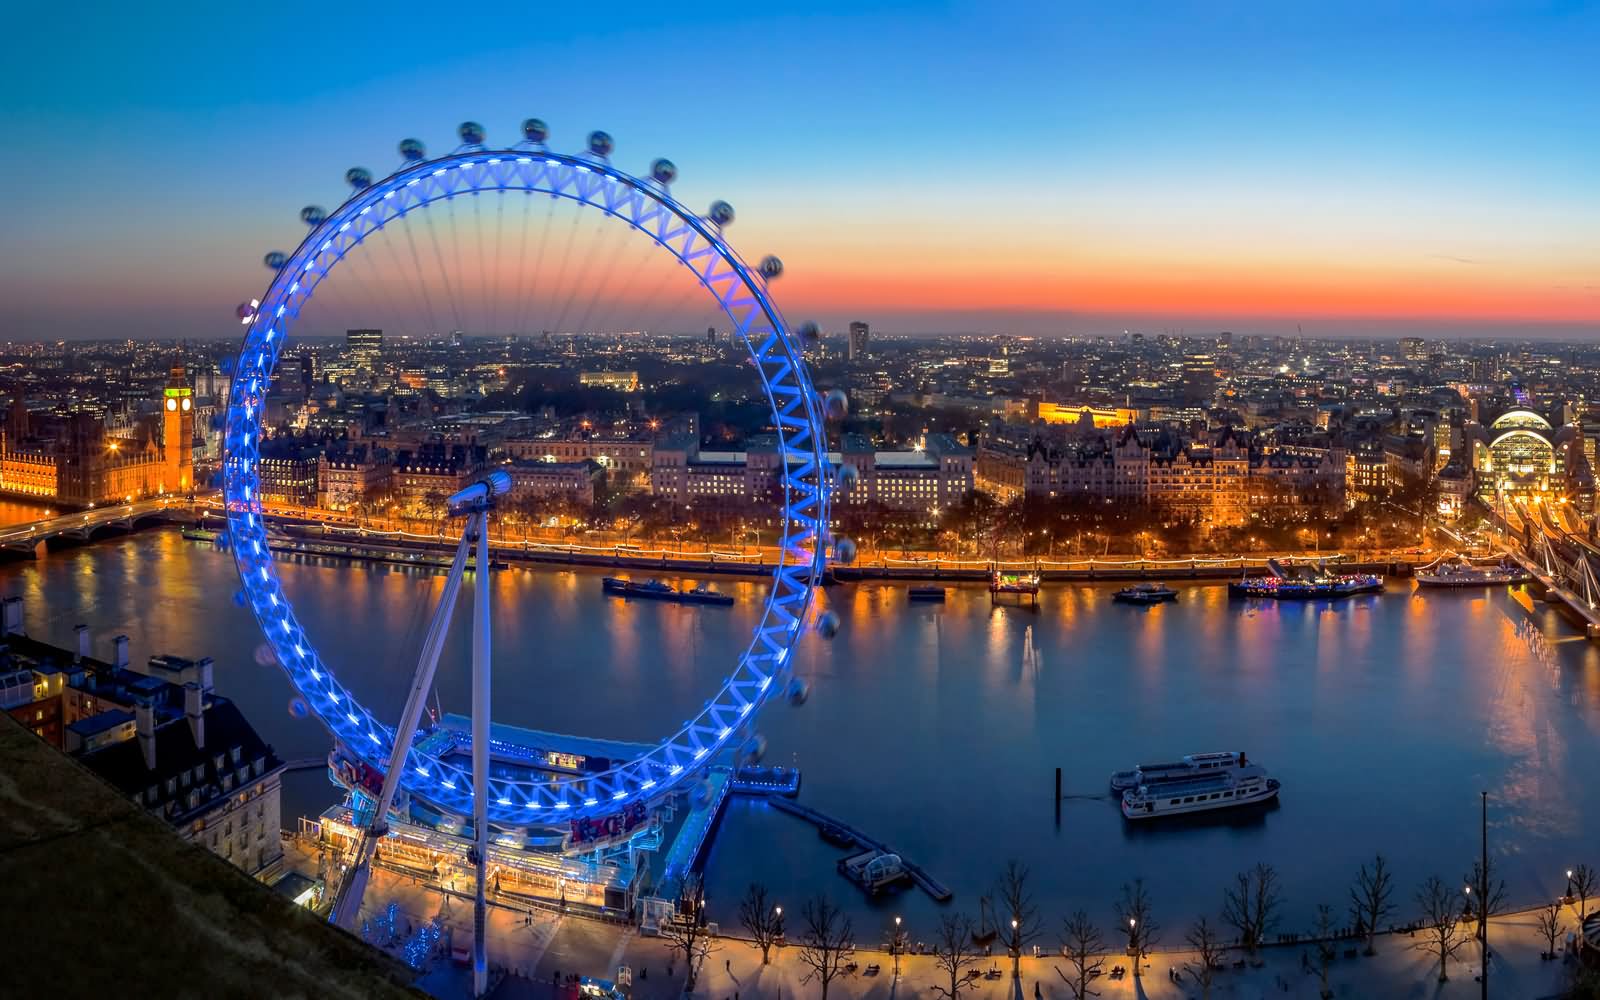 London Eye Ferris Wheel Sunset View